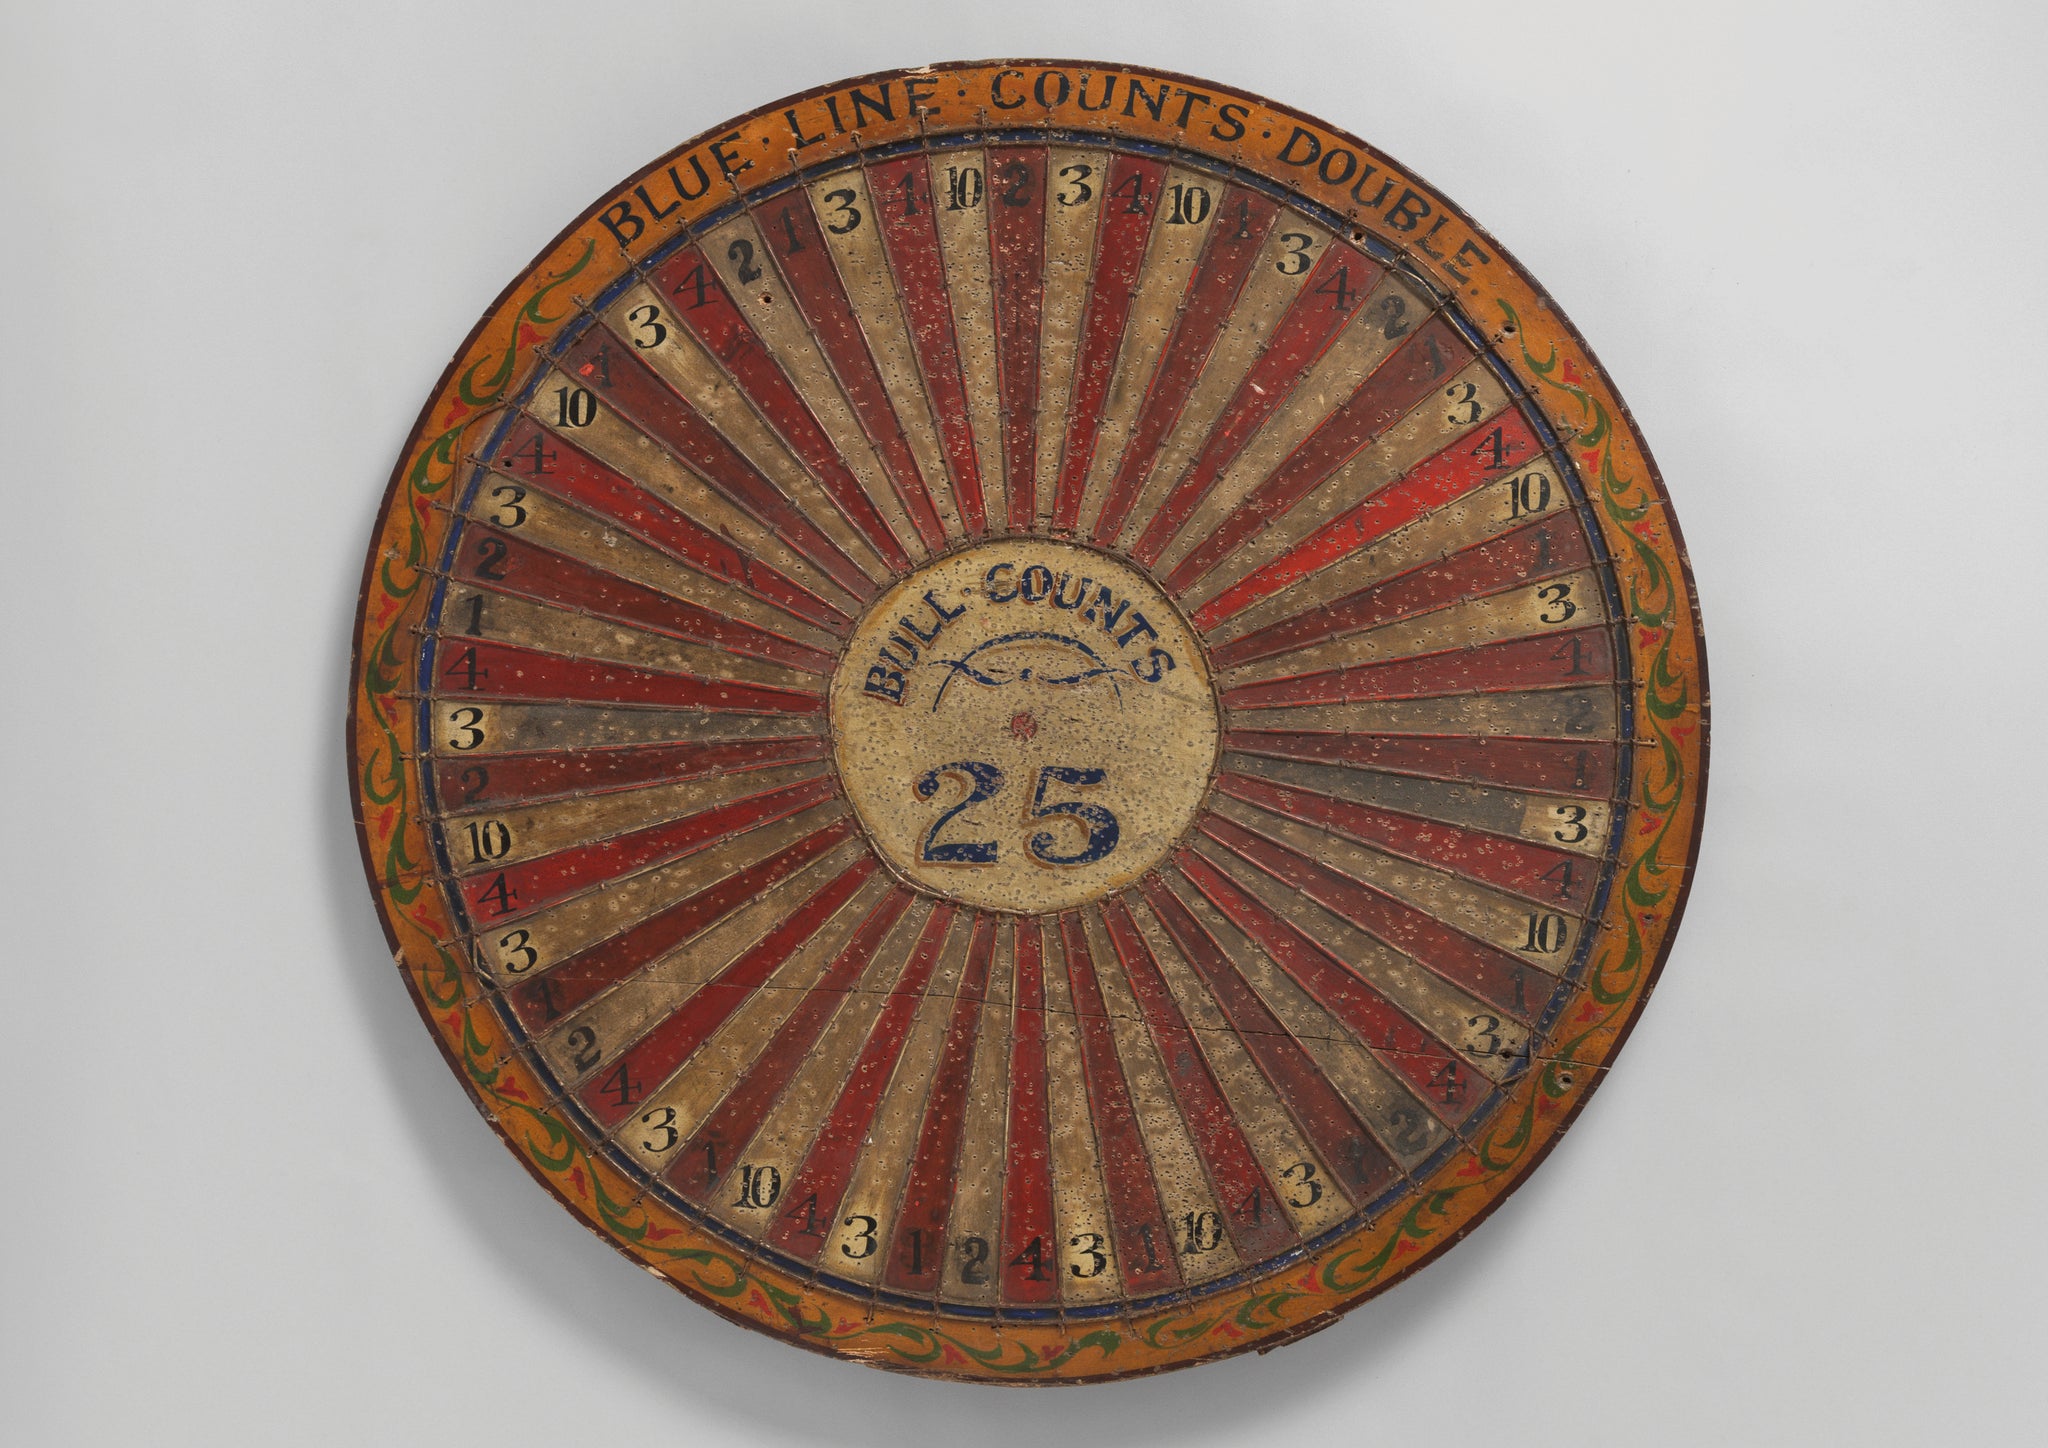 Original Early Fairground Circular Target Game Board